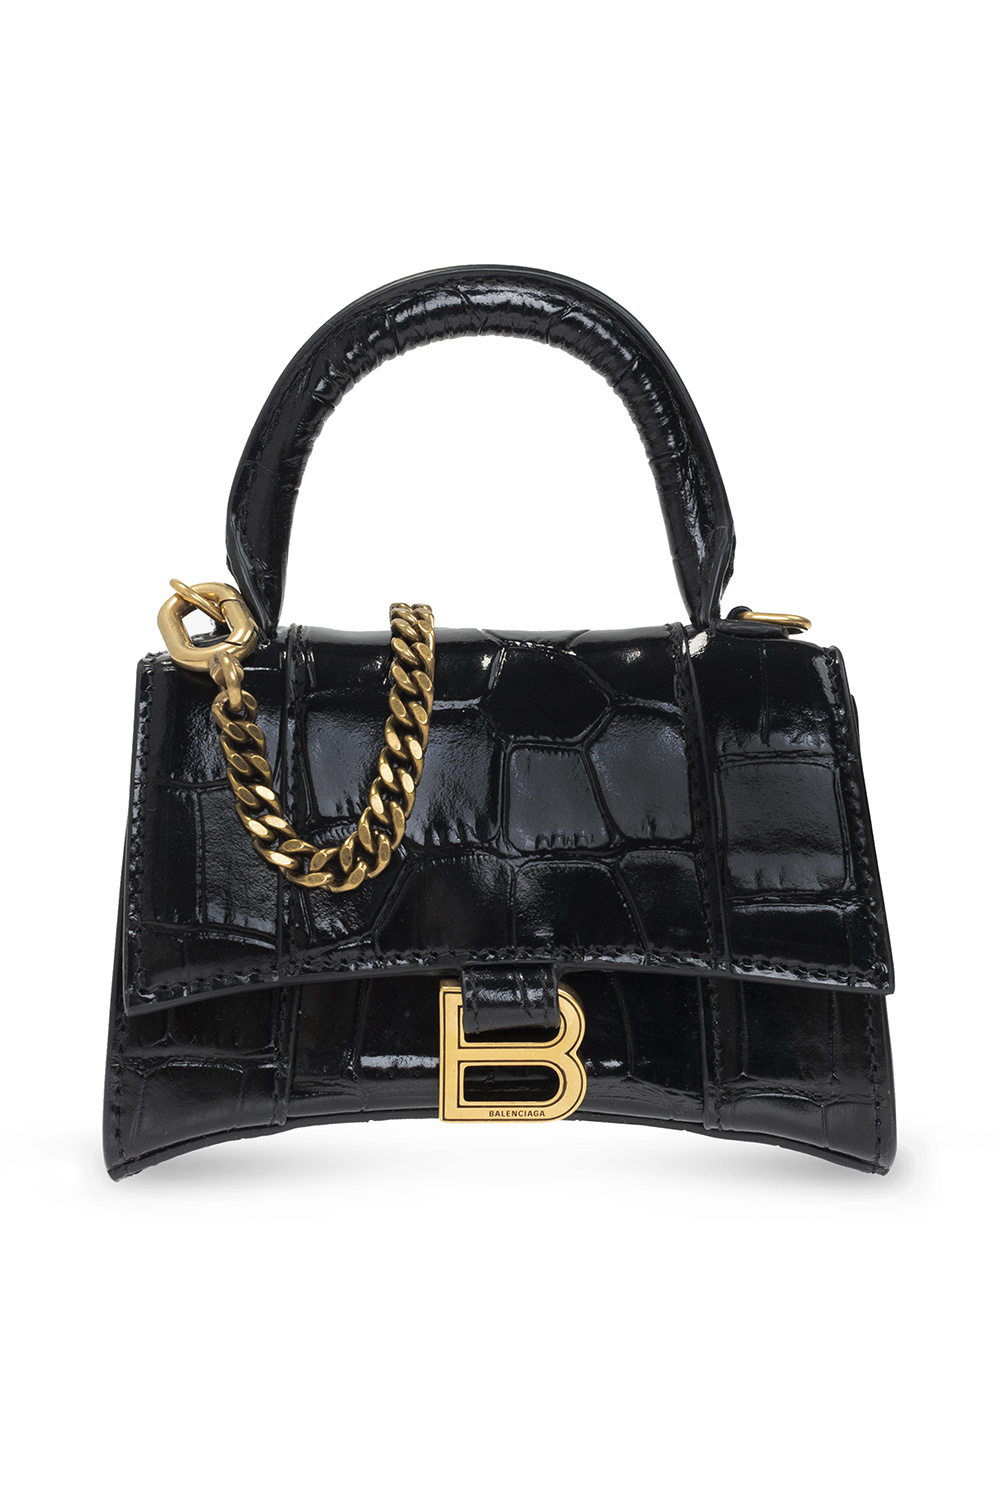 Balenciaga Hourglass Mini Leather Crossbody Bag in Black